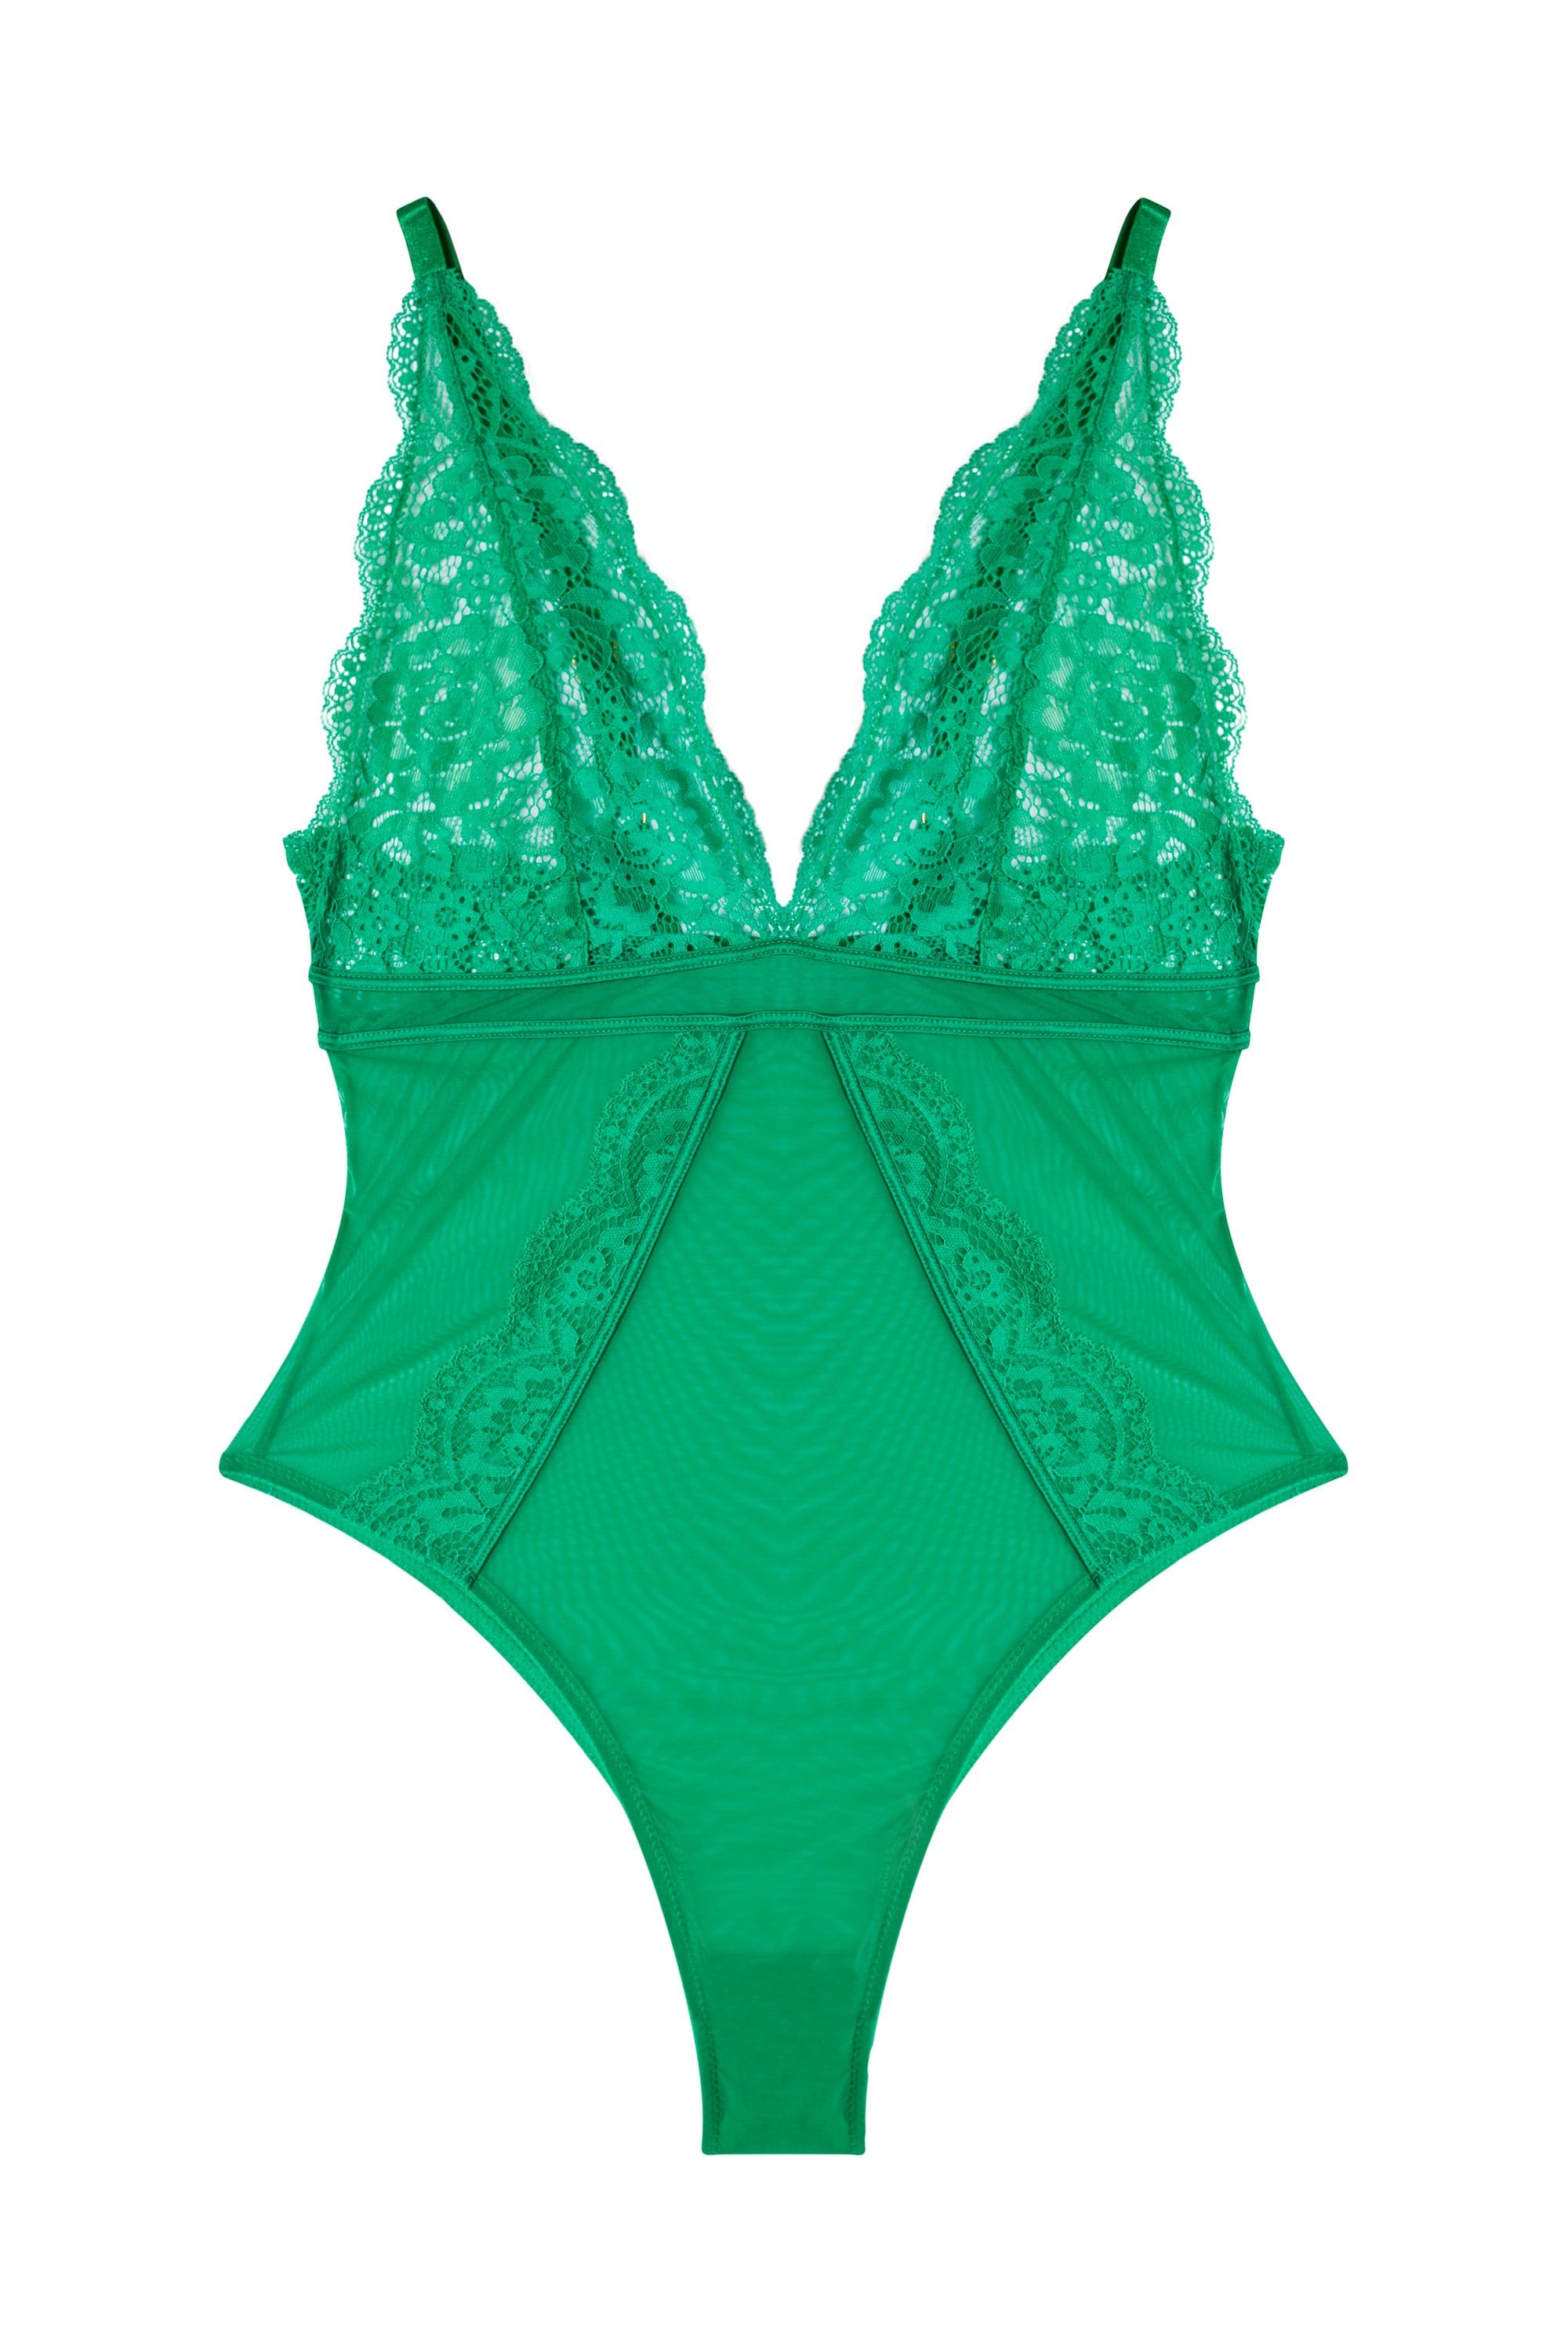 Tinar Lace Green Body